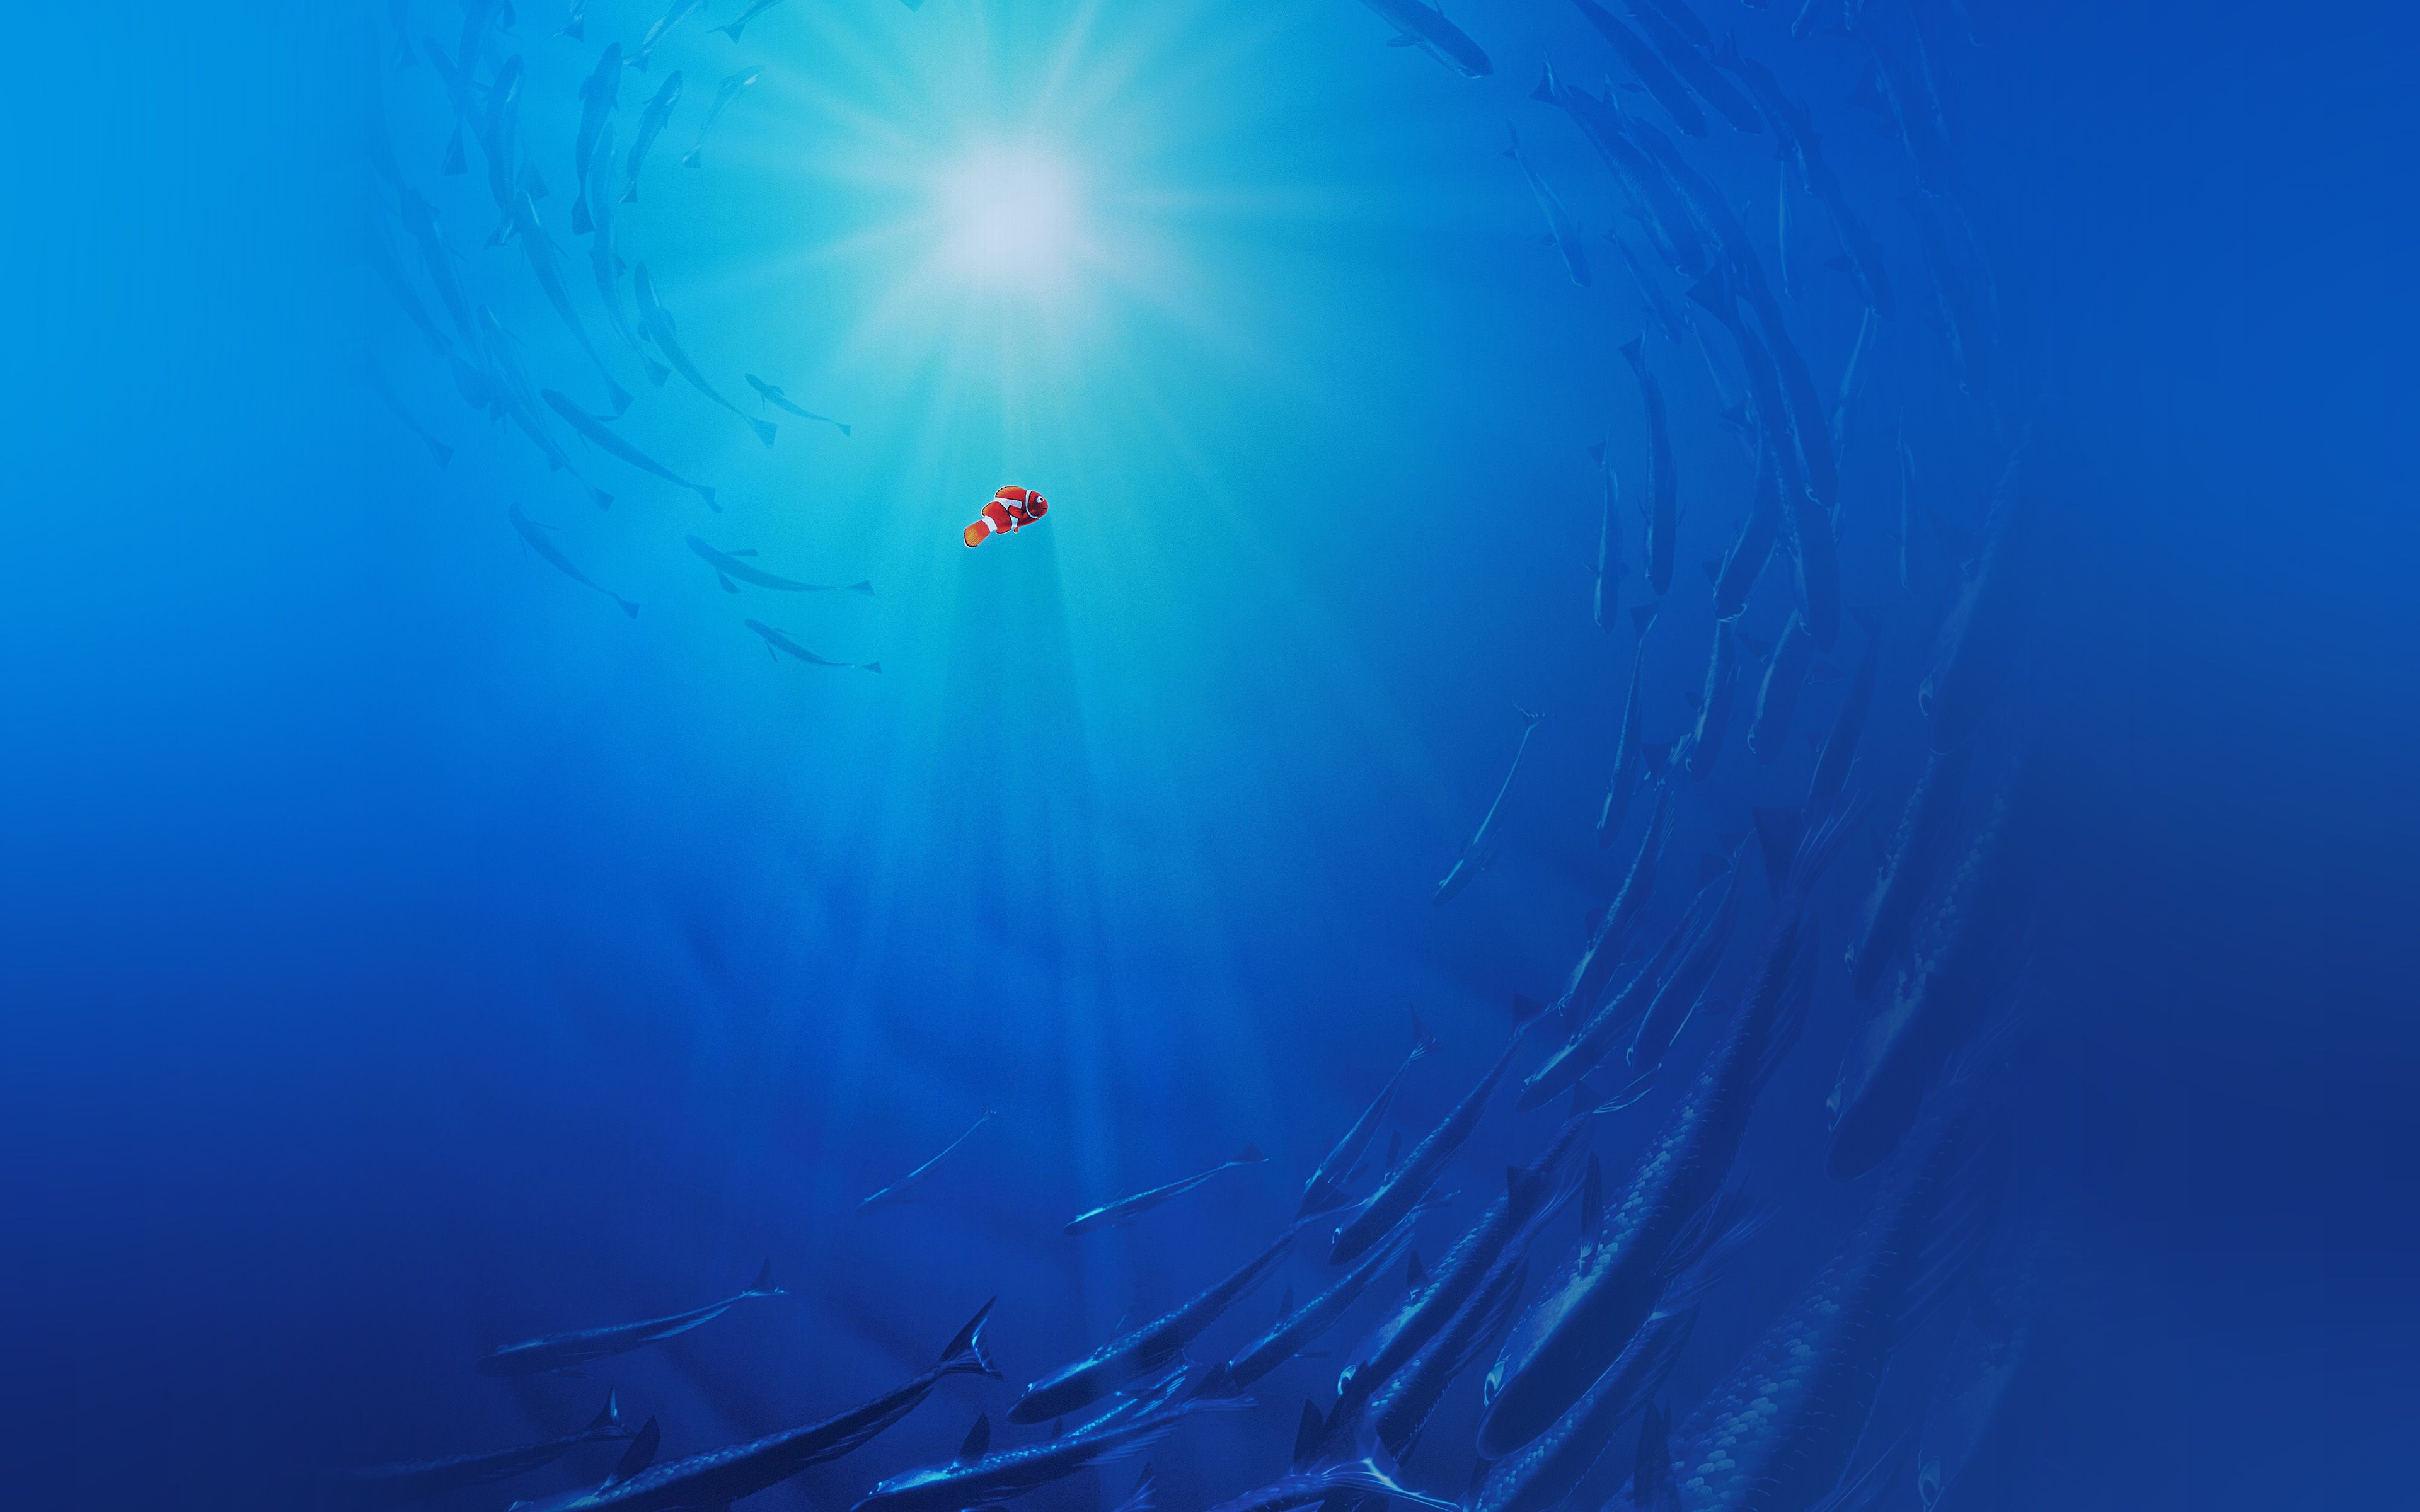 Finding Dory Disney Nemo Cute Wallpaper